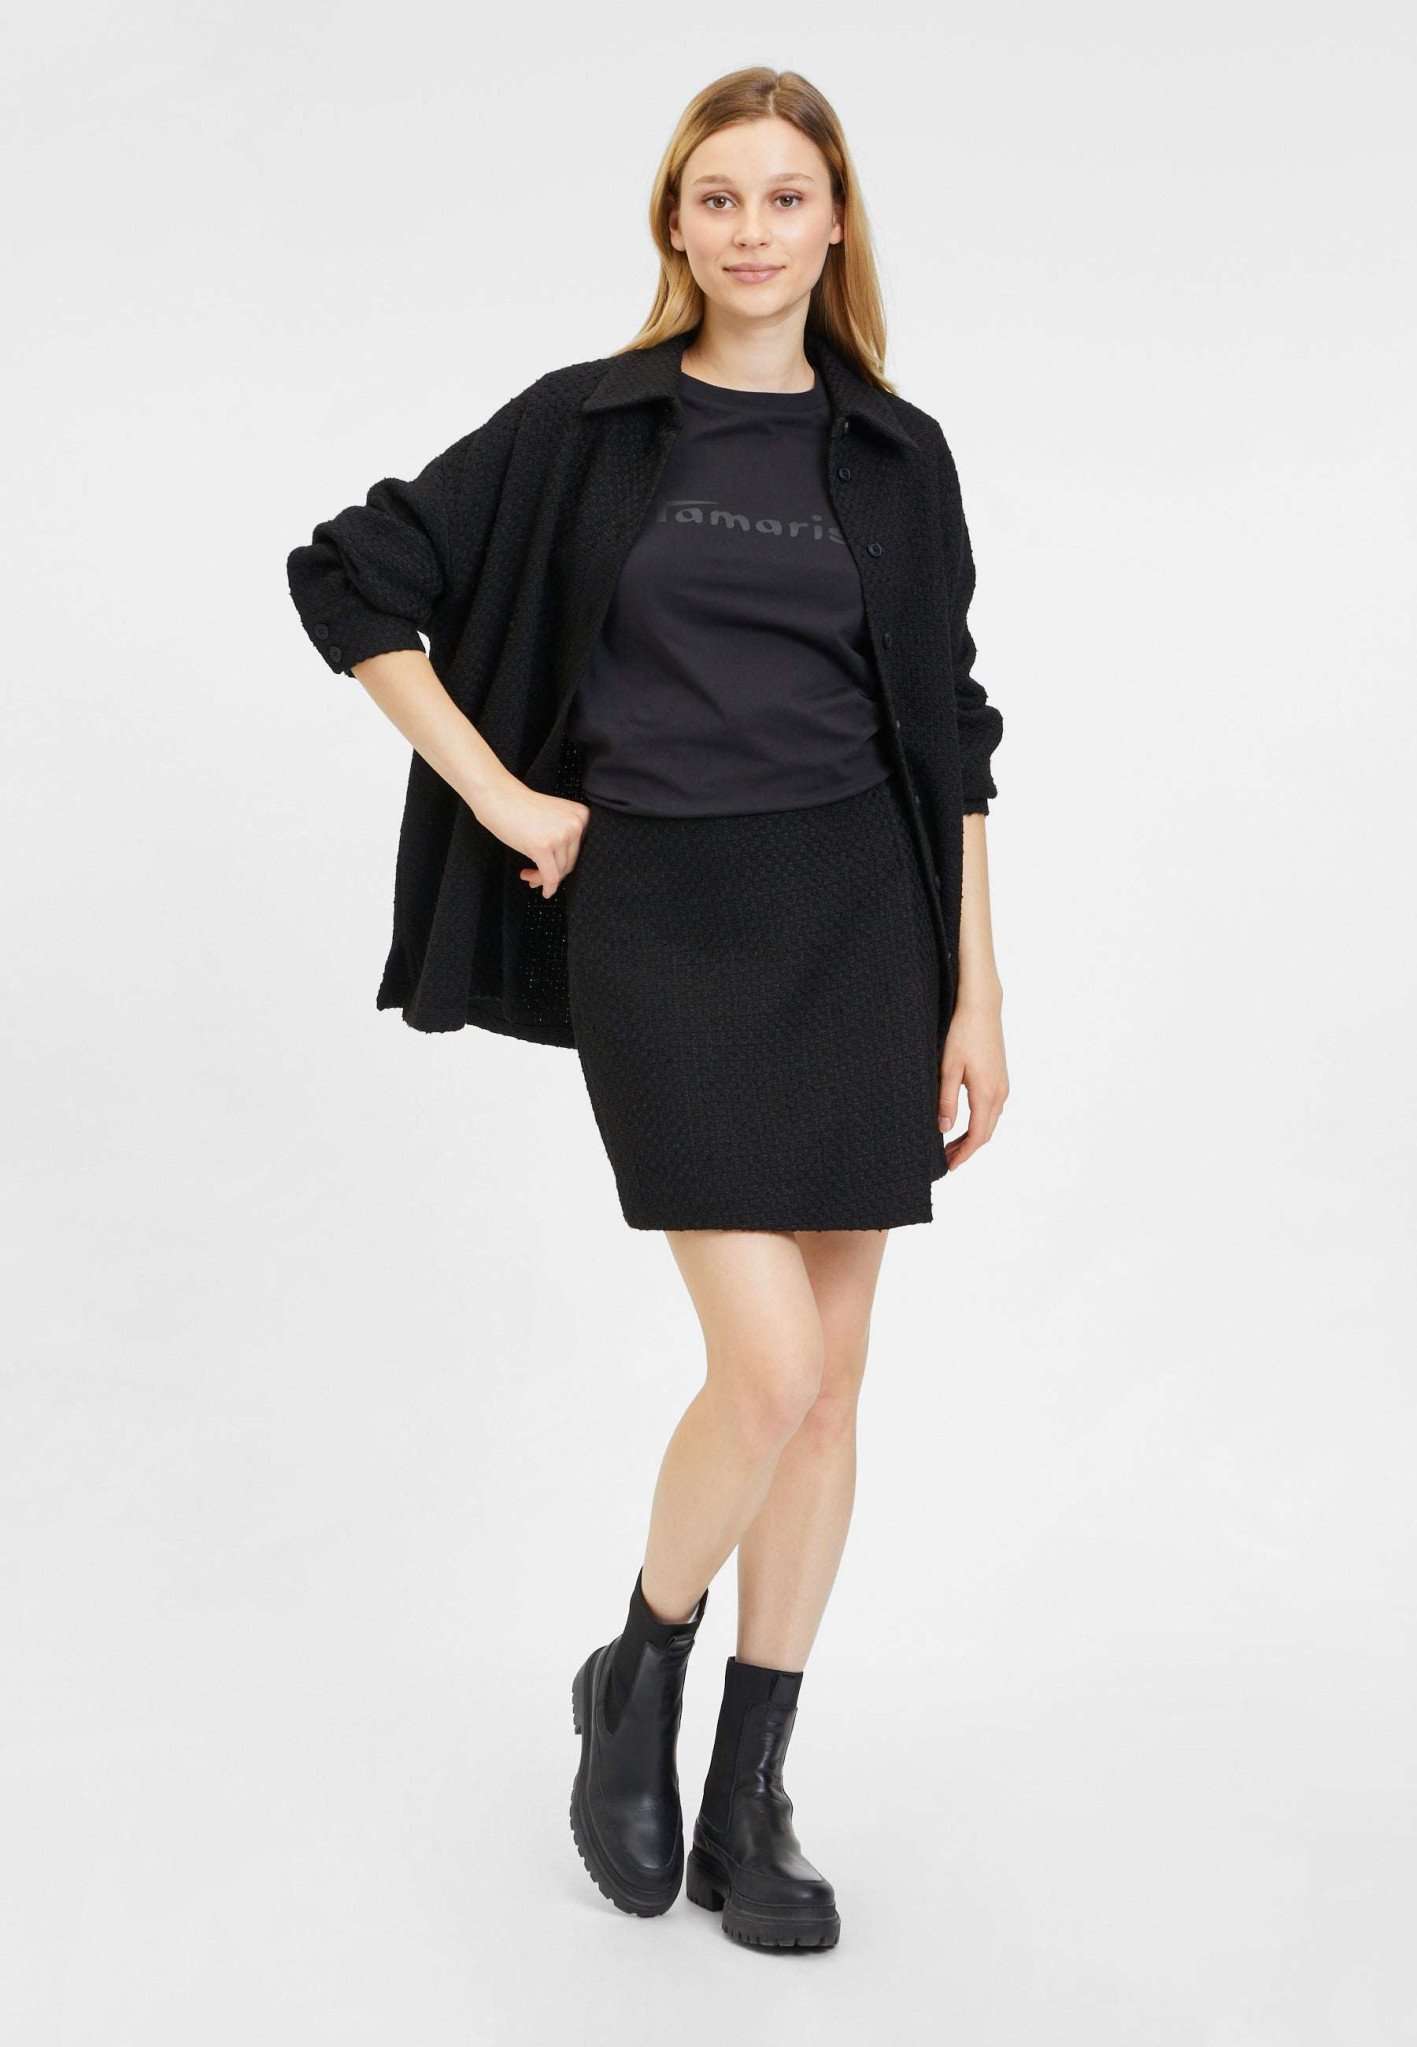 Barumini Asymetrical Skirt in Black Beauty Röcke Tamaris   